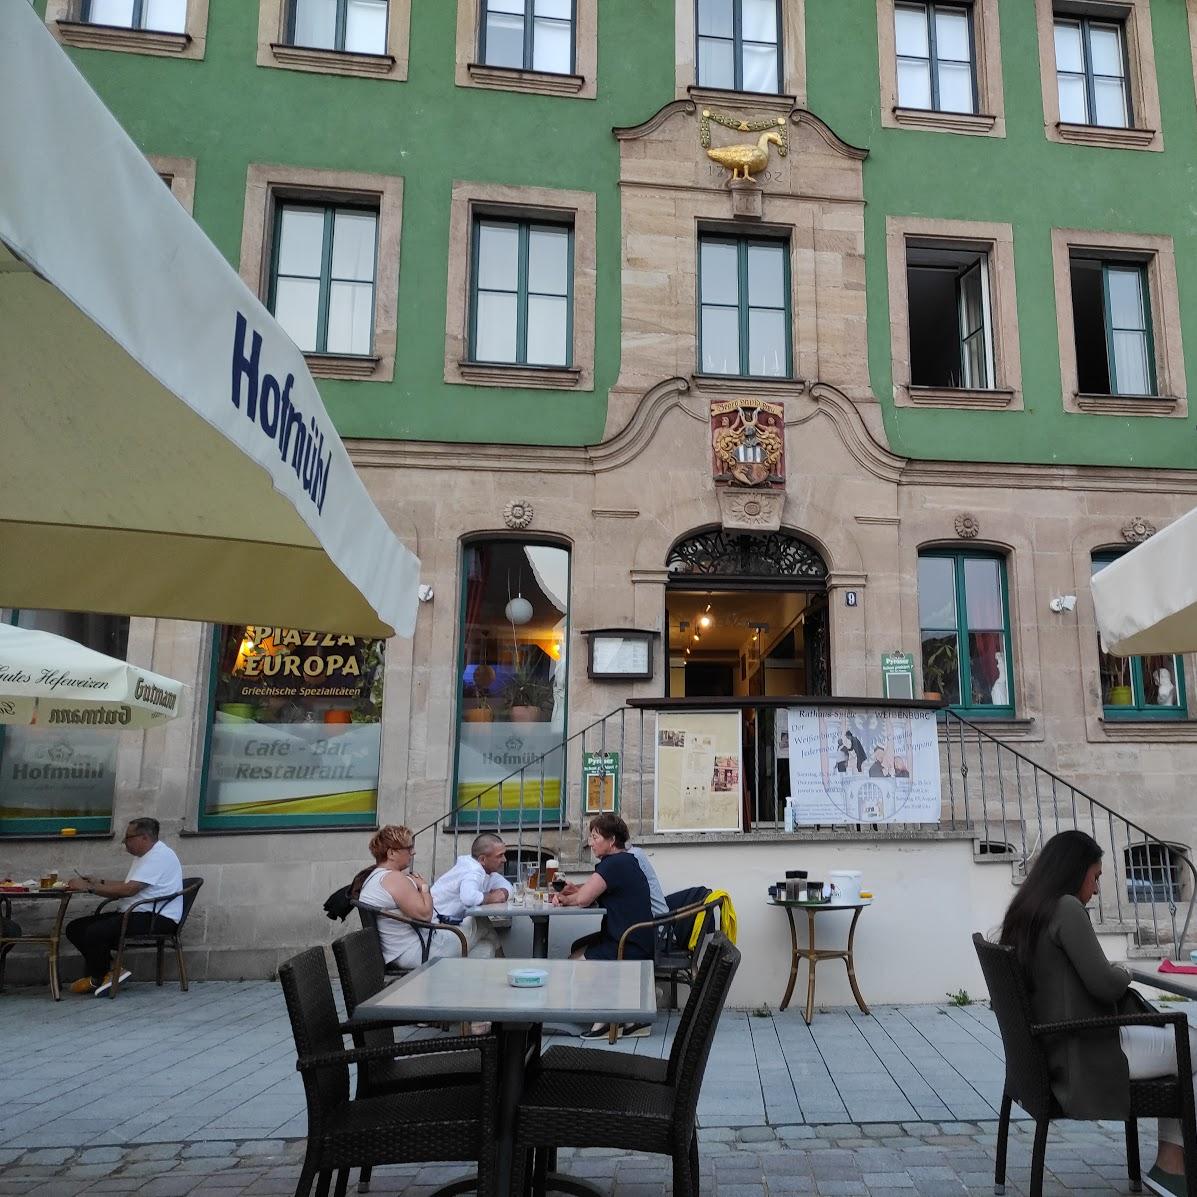 Restaurant "Piazza Europa" in  Bayern